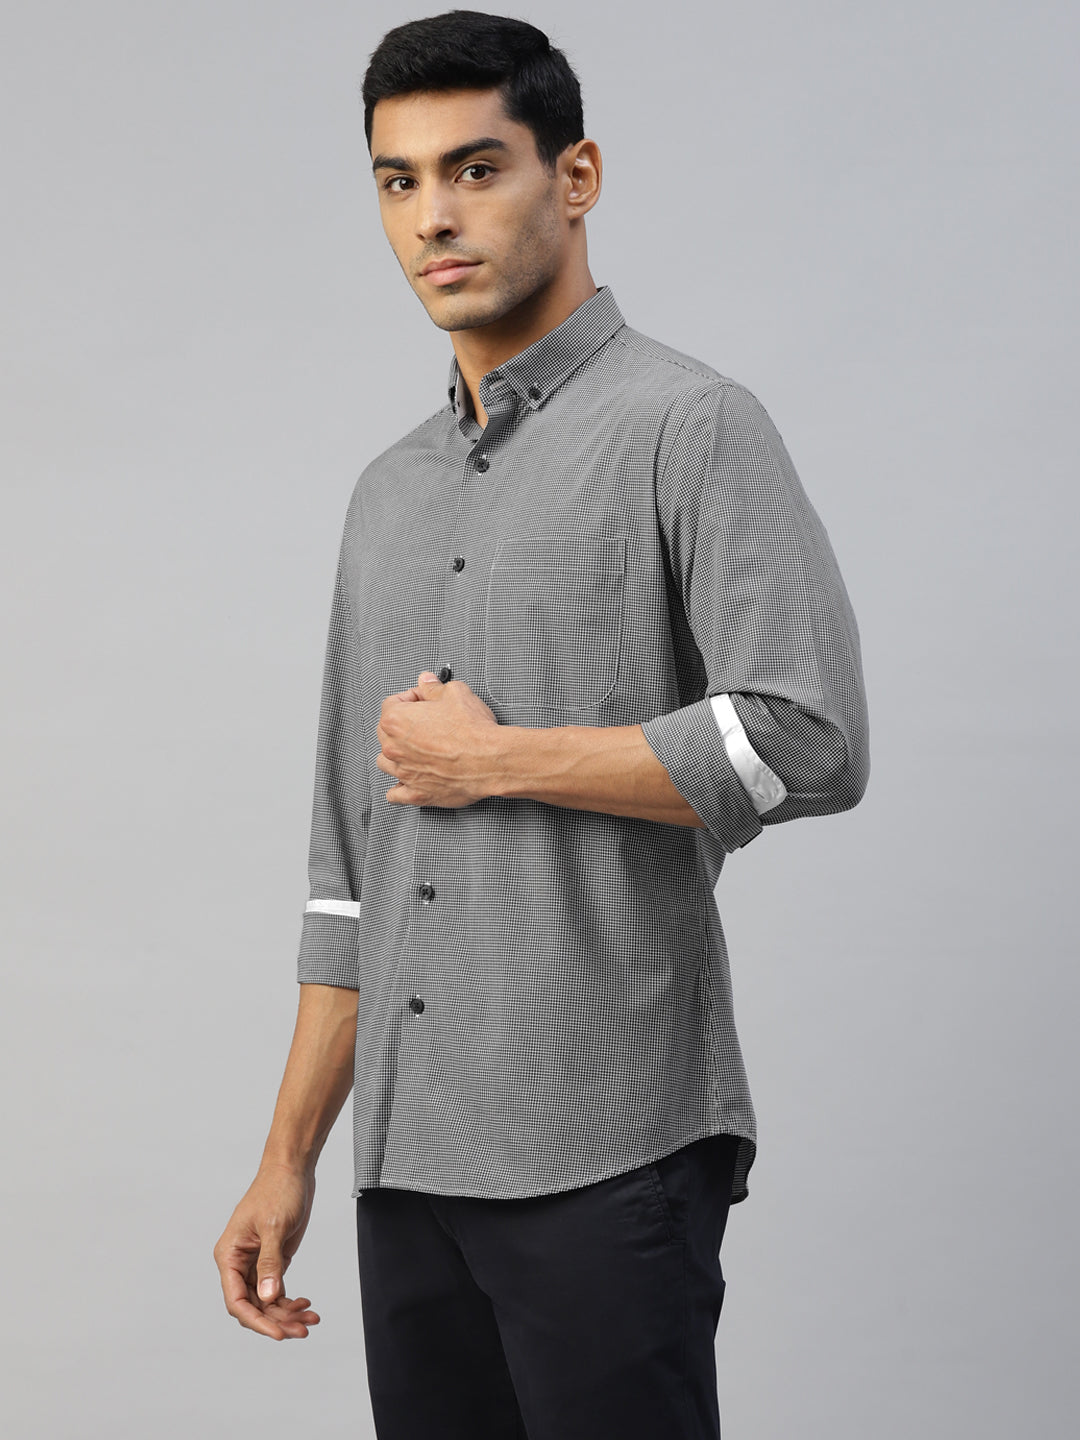 Don Vino Grey Checks Slim Fit Casual Shirt for Men